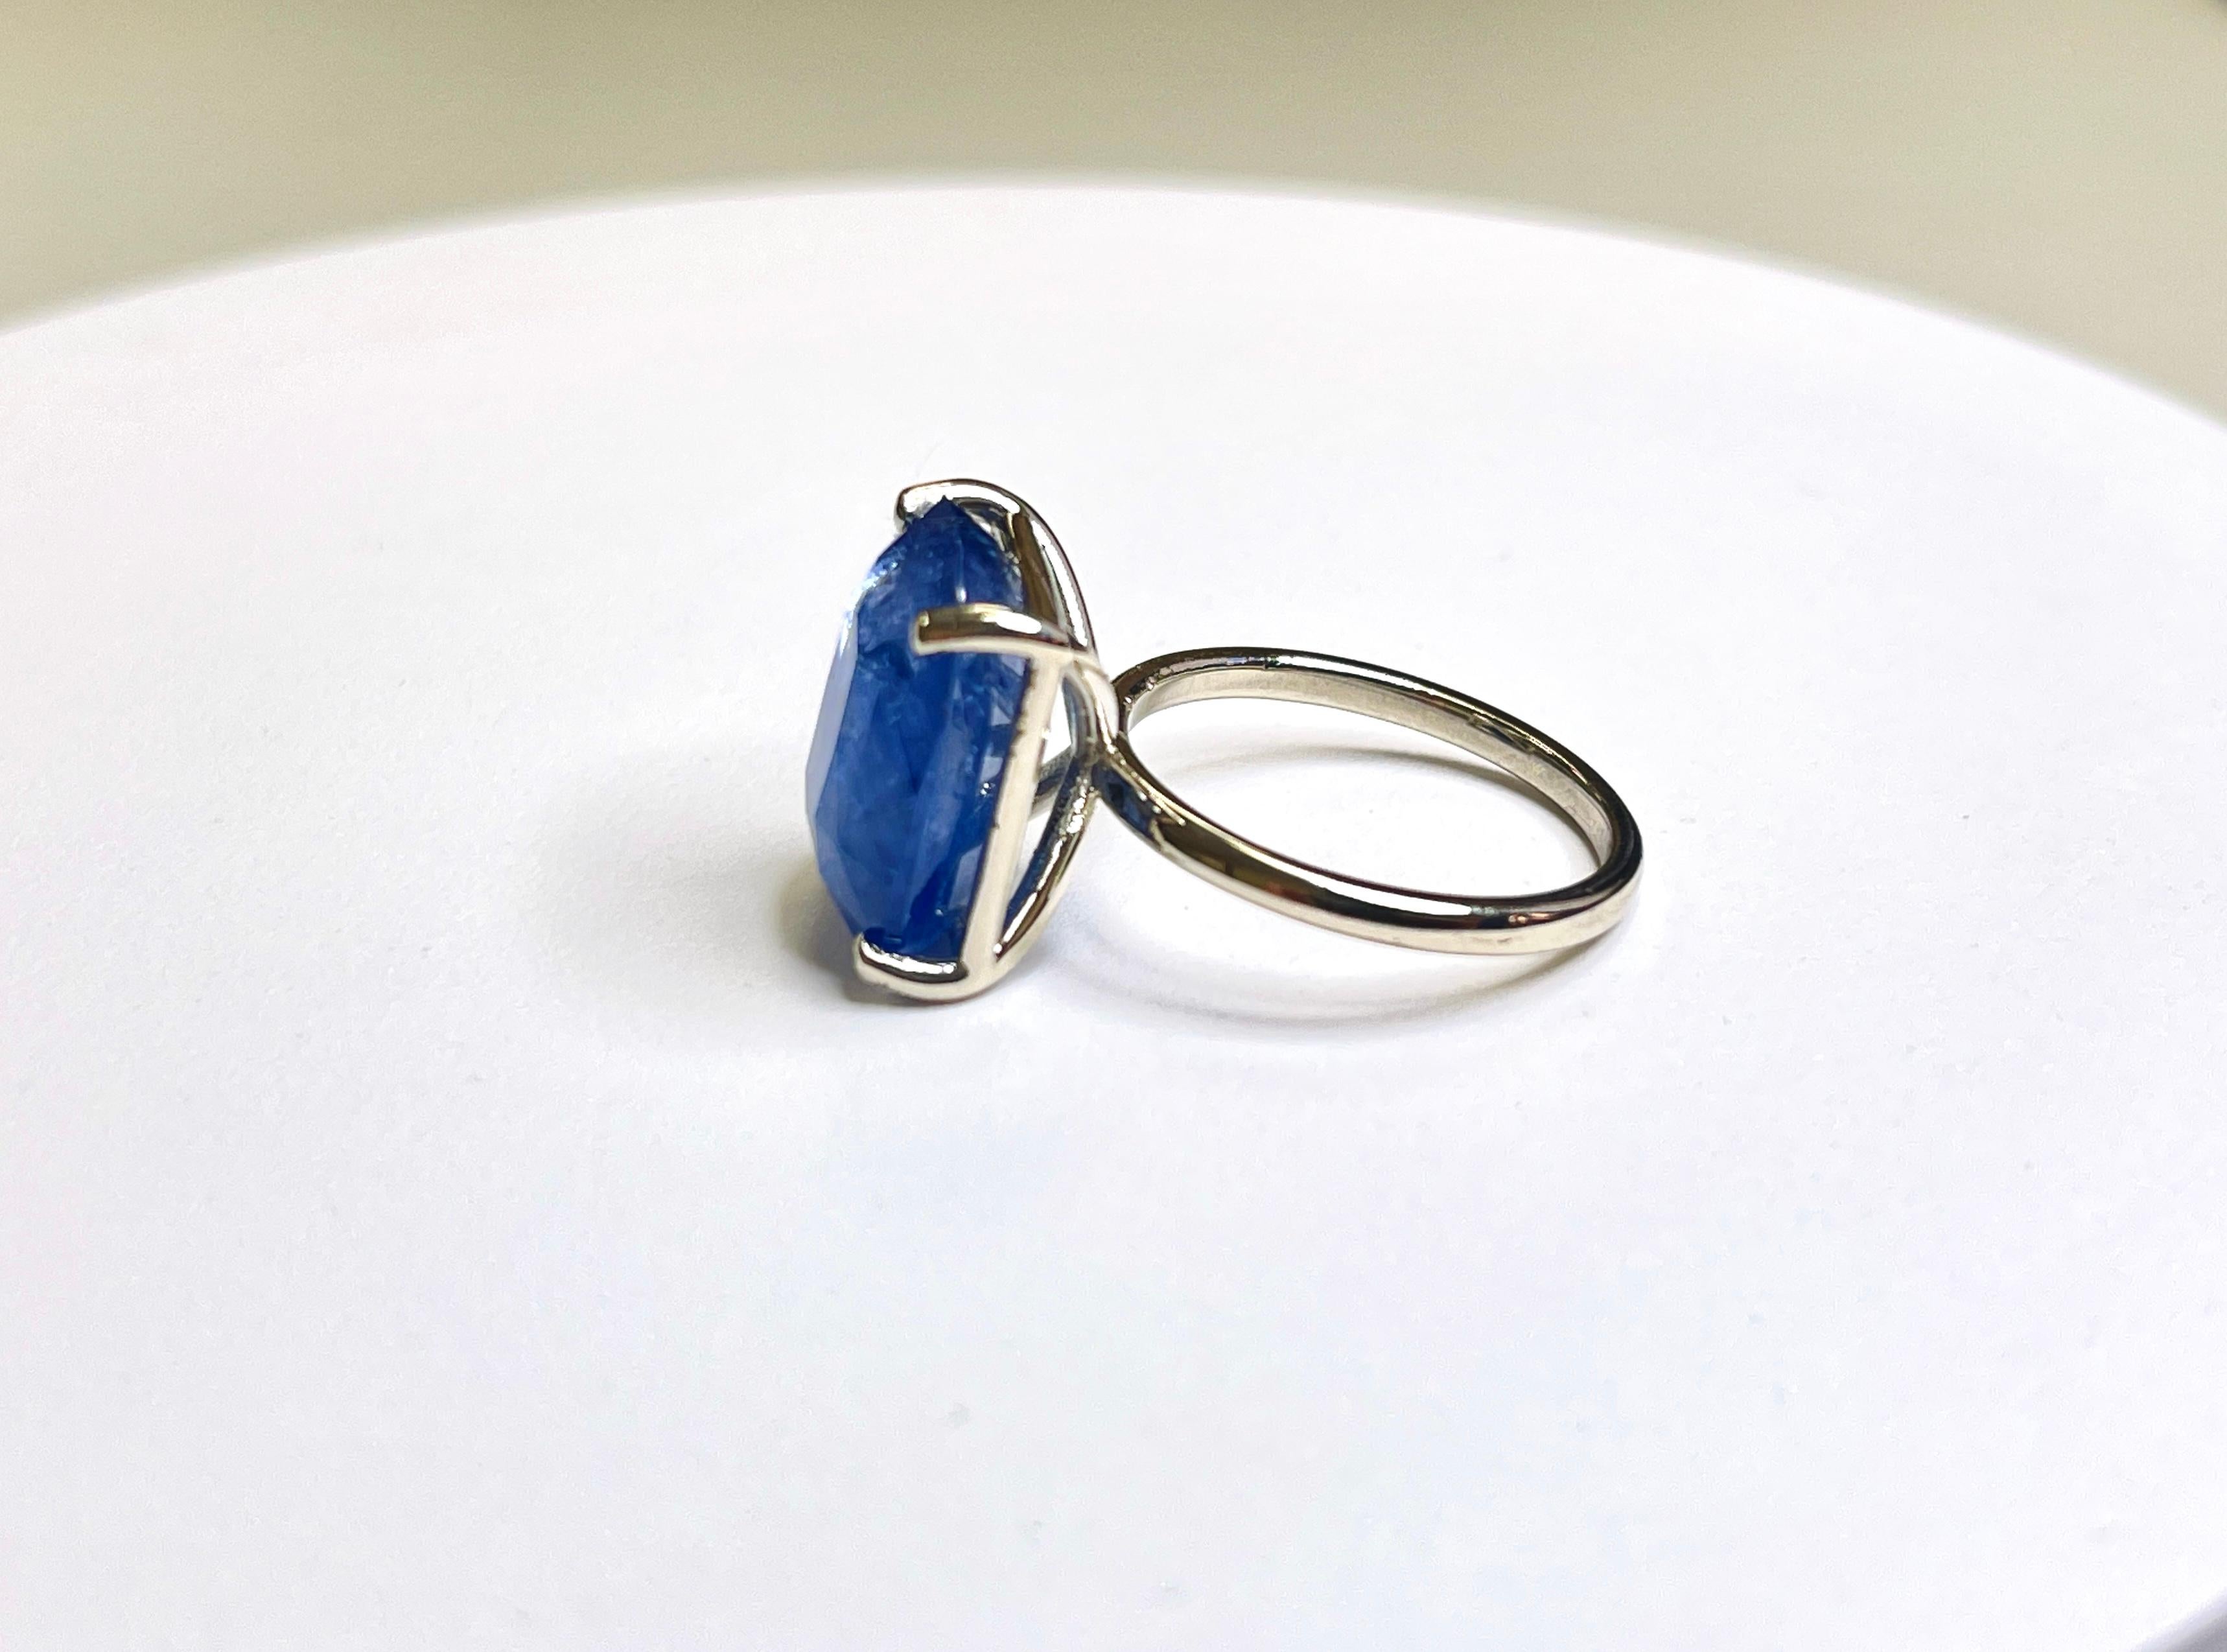 13.42 Carat Intense Blue Cushion Cut Natural Sapphire 14K White Gold Ring For Sale 2